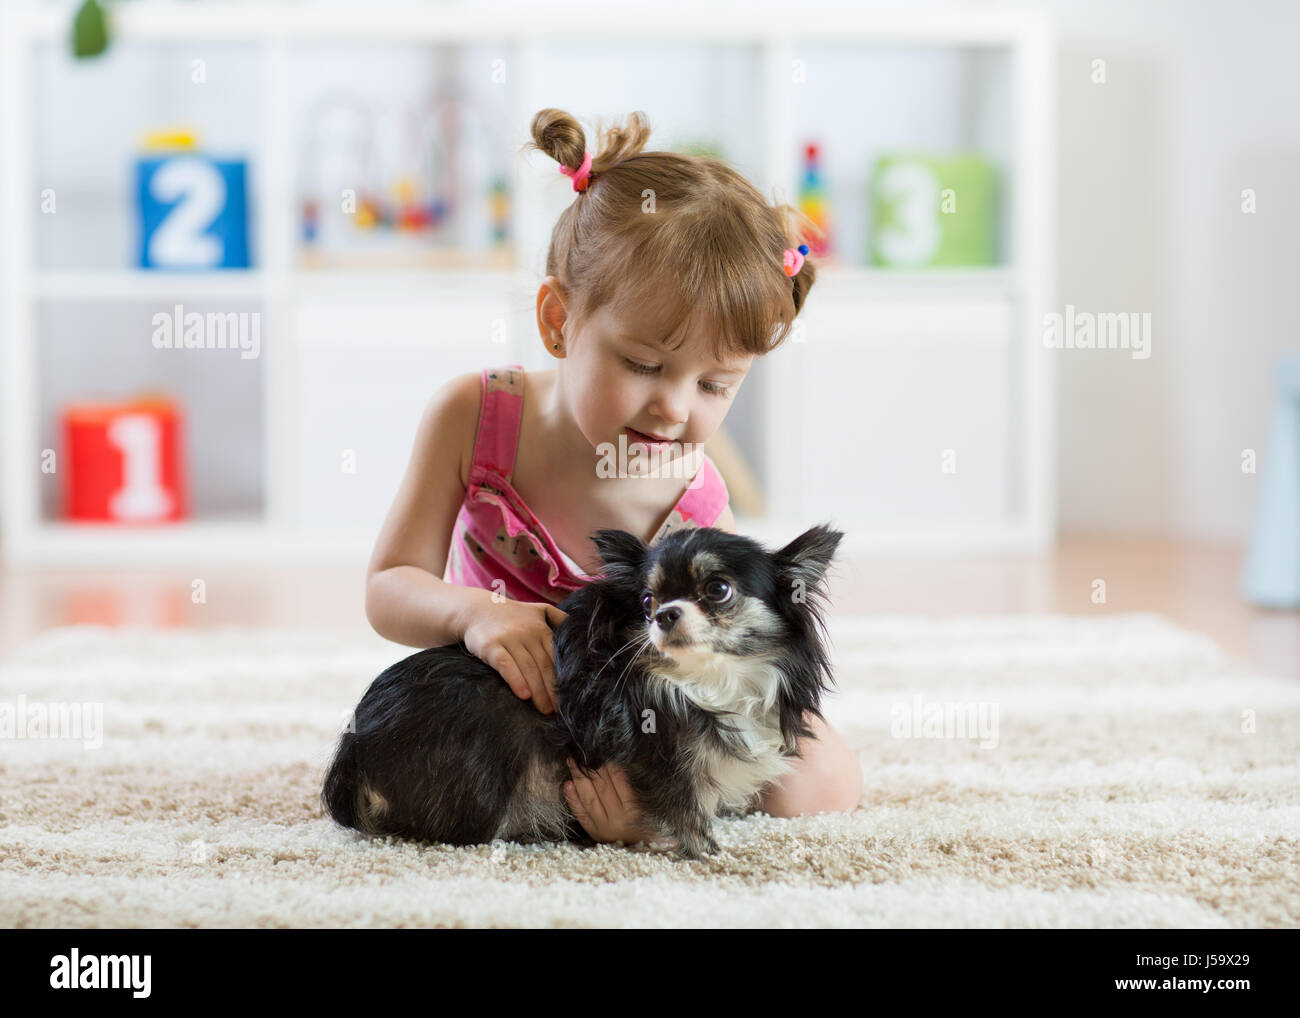 Lovely little girl and her pet dog Stock Photo